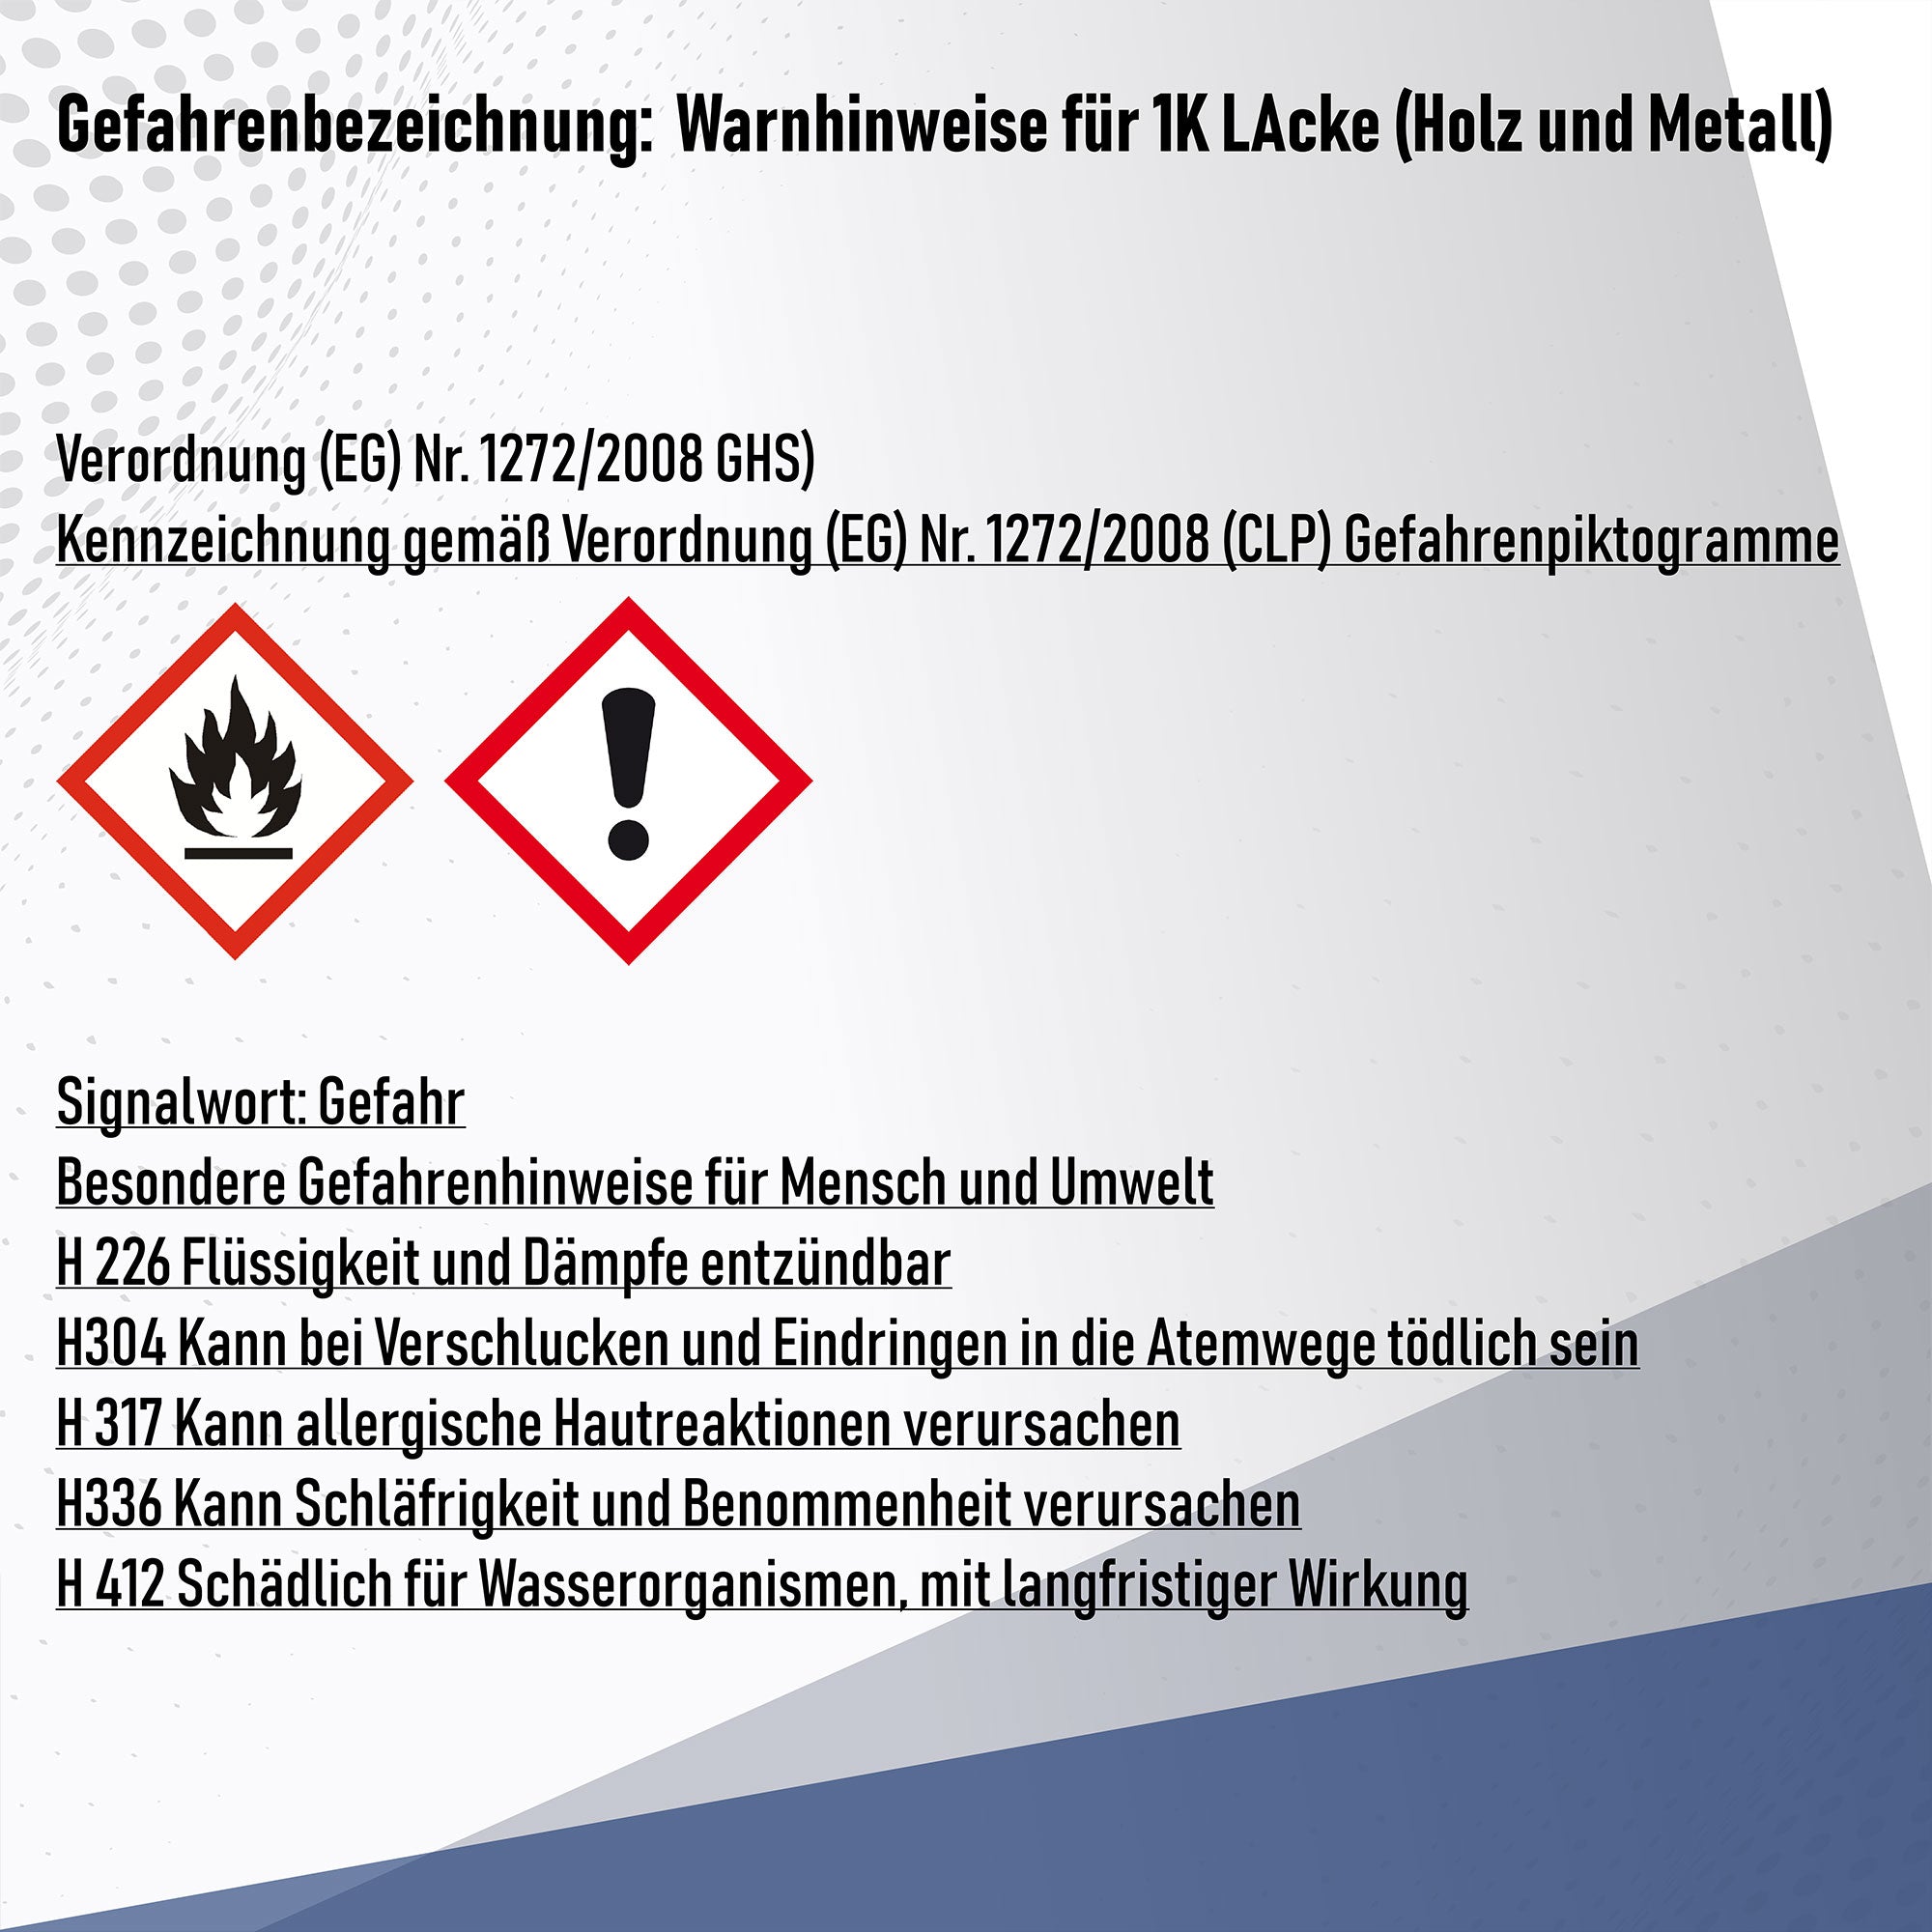 Hamburger Lack-Profi Buntlack in Sonnengelb RAL 1037 mit Lackierset (X300) & Verdünnung (1 L) - 30% Sparangebot